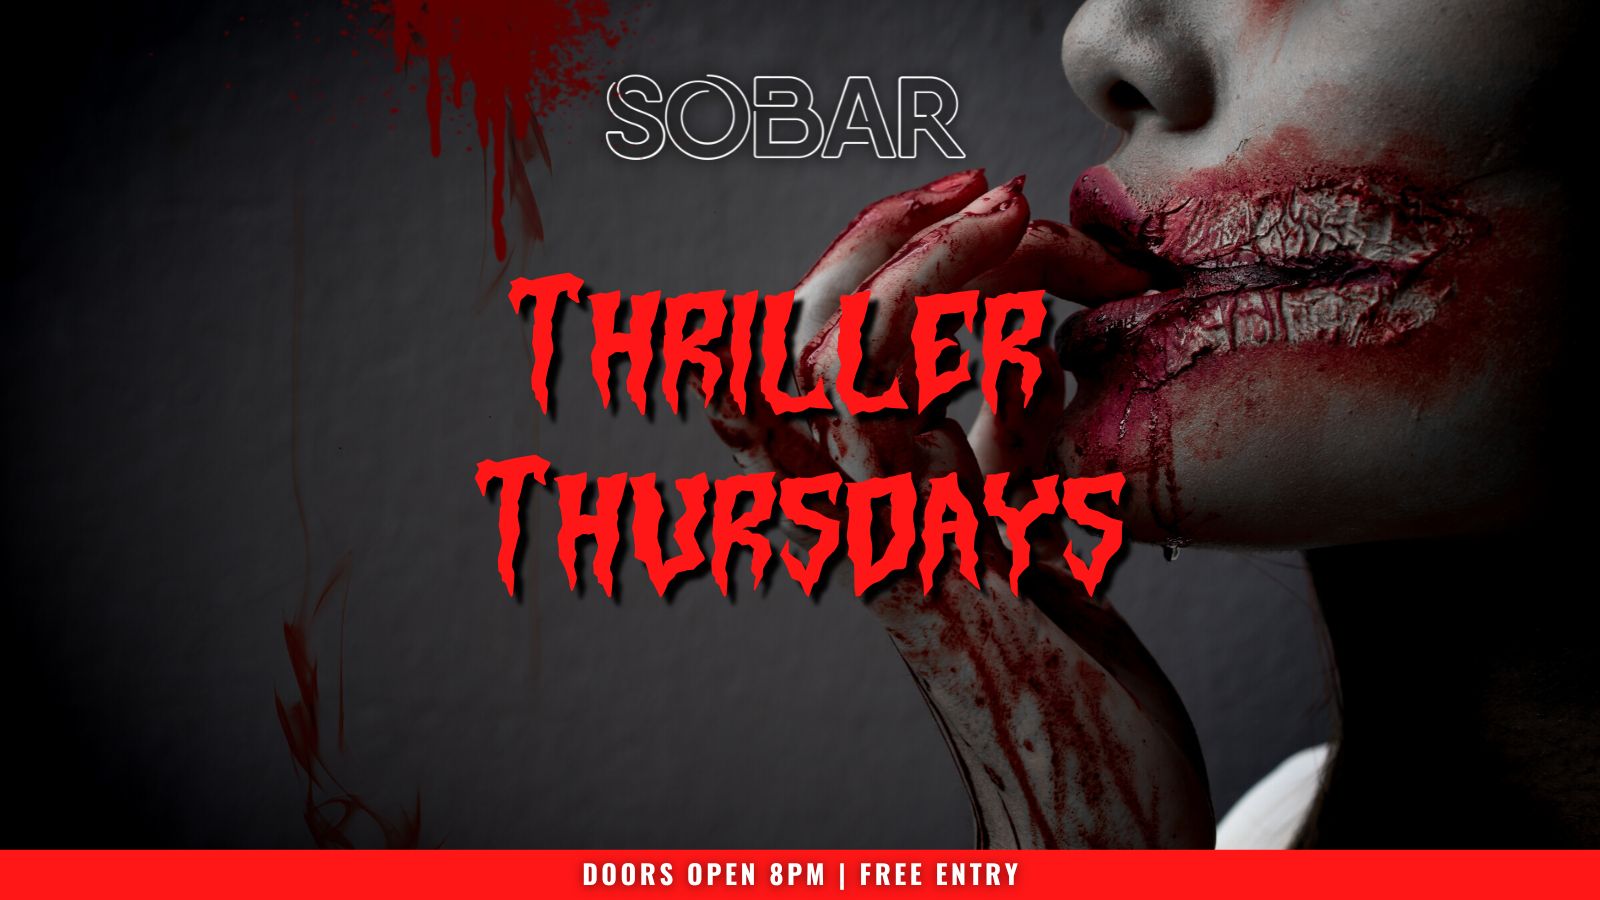 SOBAR THURSDAY’S presents “Thriller” Thursday